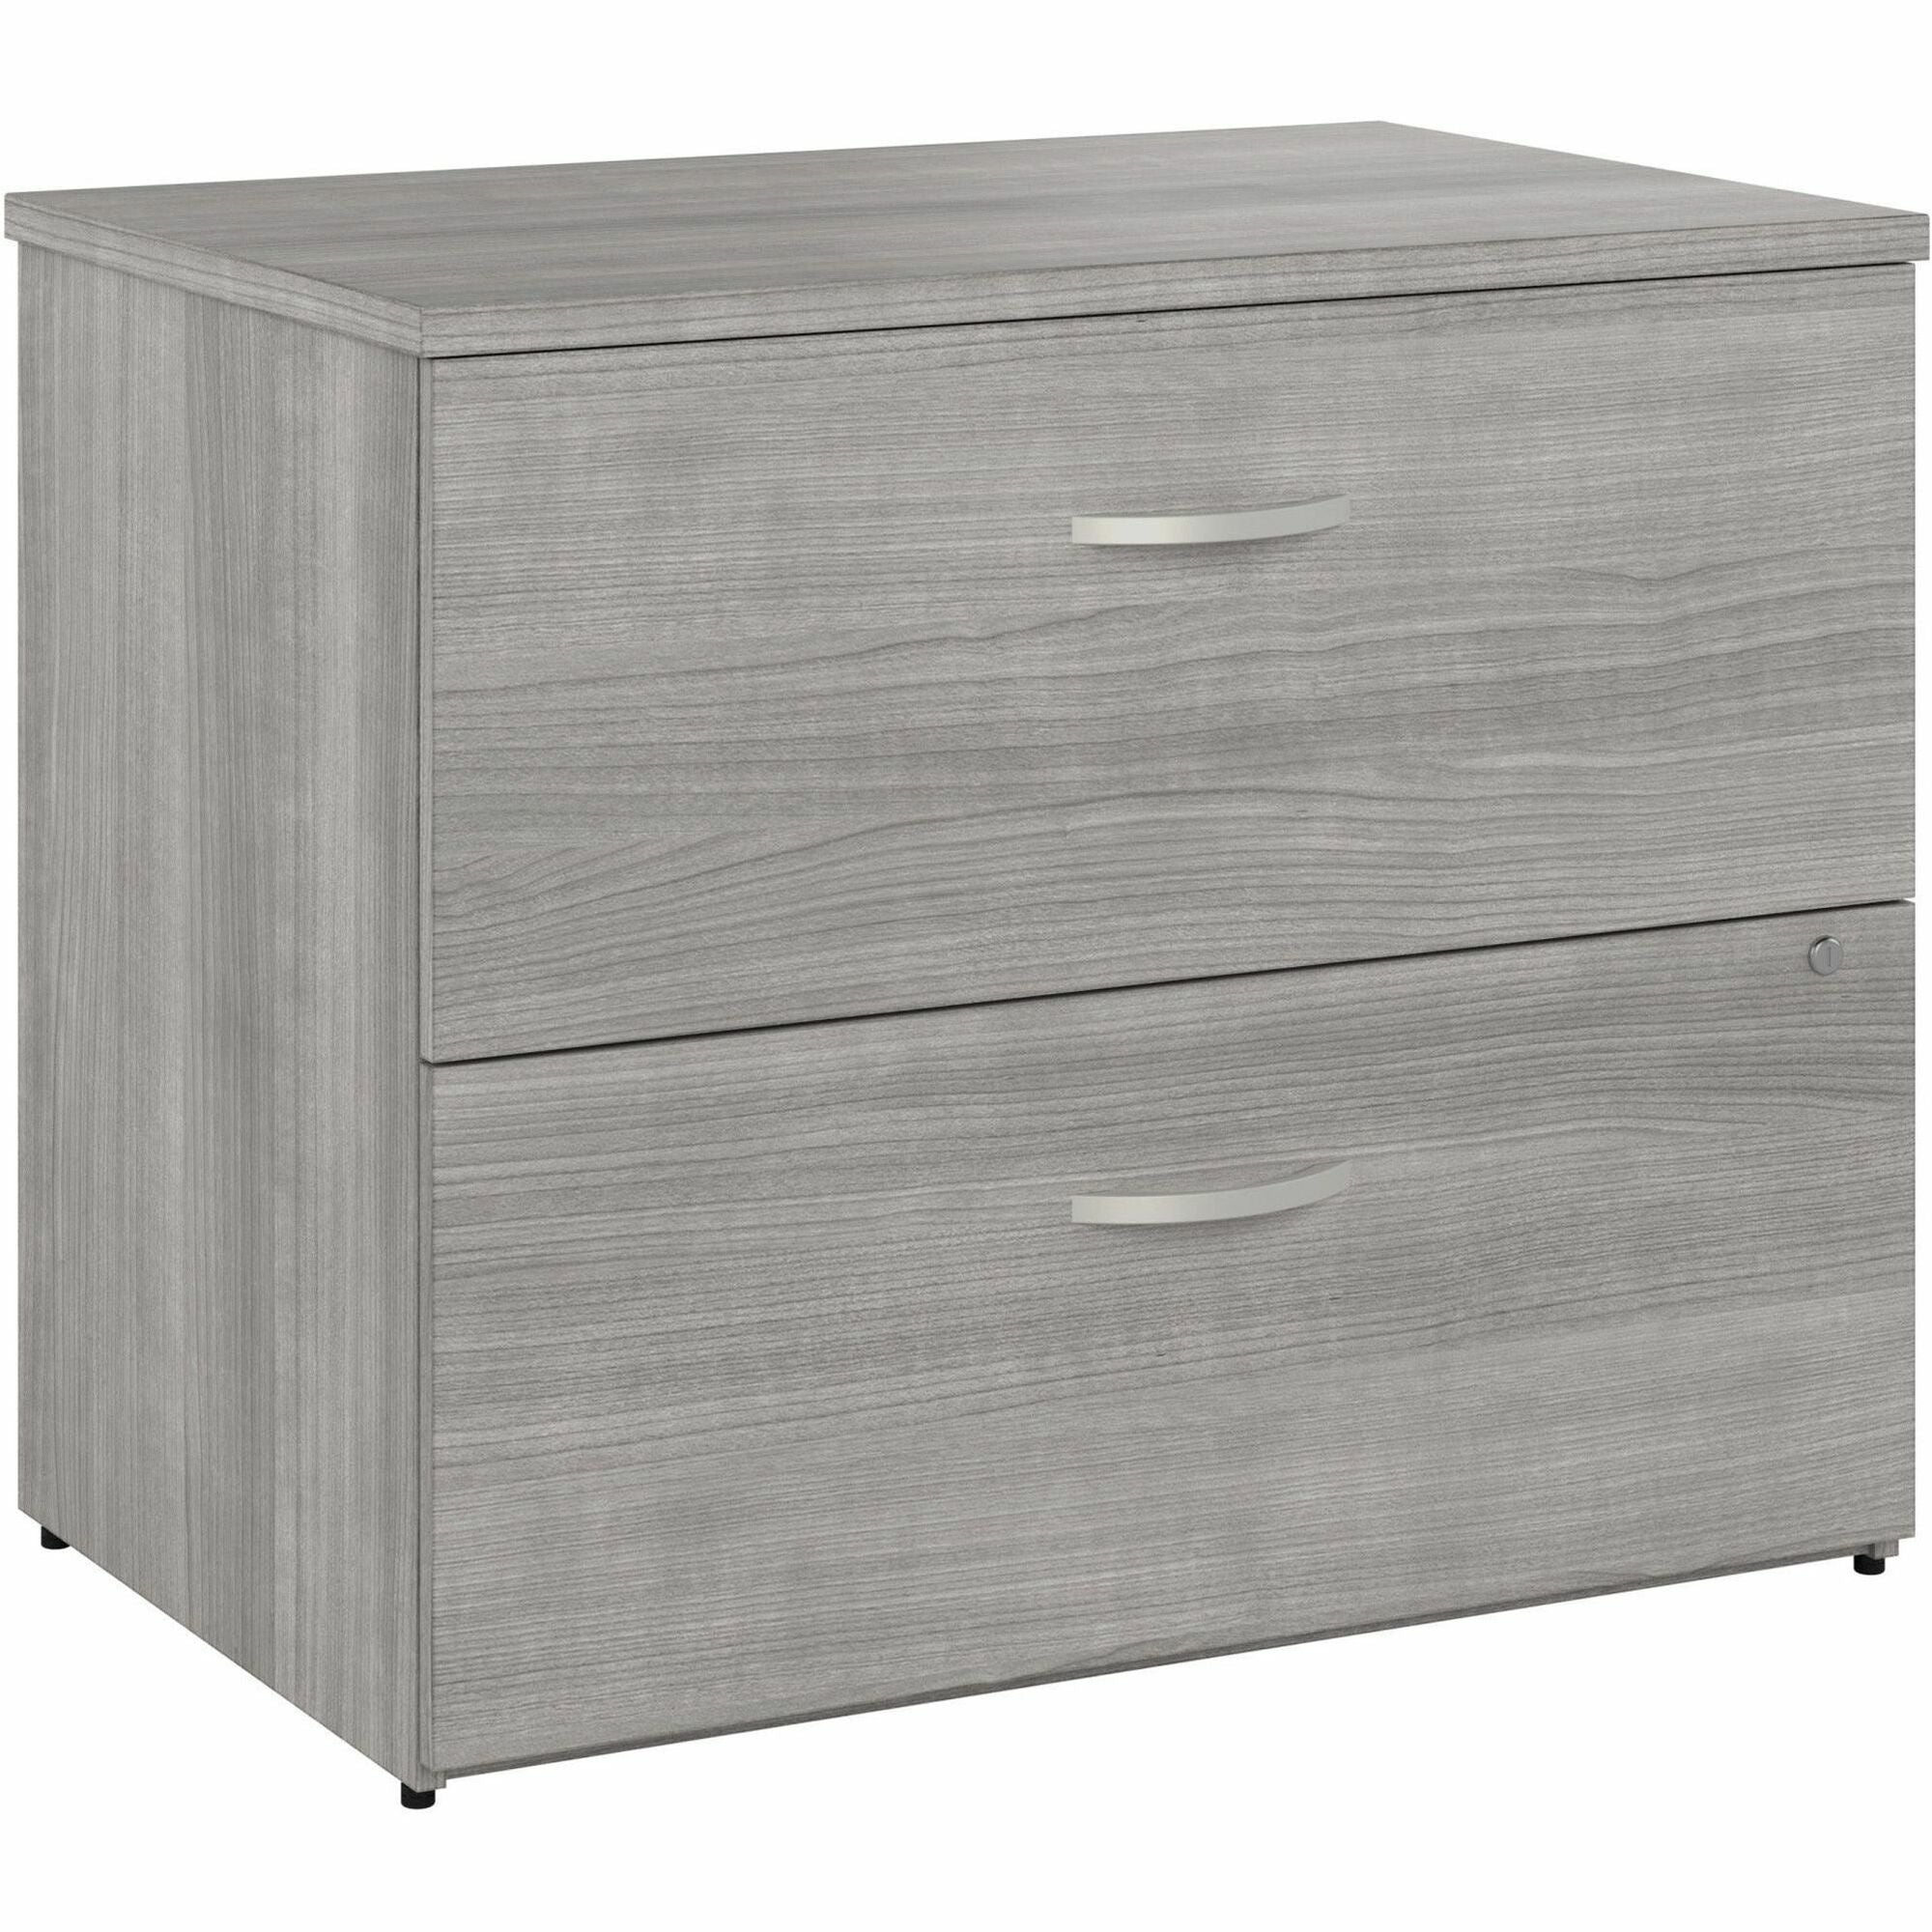 Bush Business Furniture Studio C 2 Drawer Lateral File Cabinet - 35.7" x 23.4"29.8" - 2 x File Drawer(s) - Finish: Platinum Gray, Thermofused Laminate (TFL) - 1